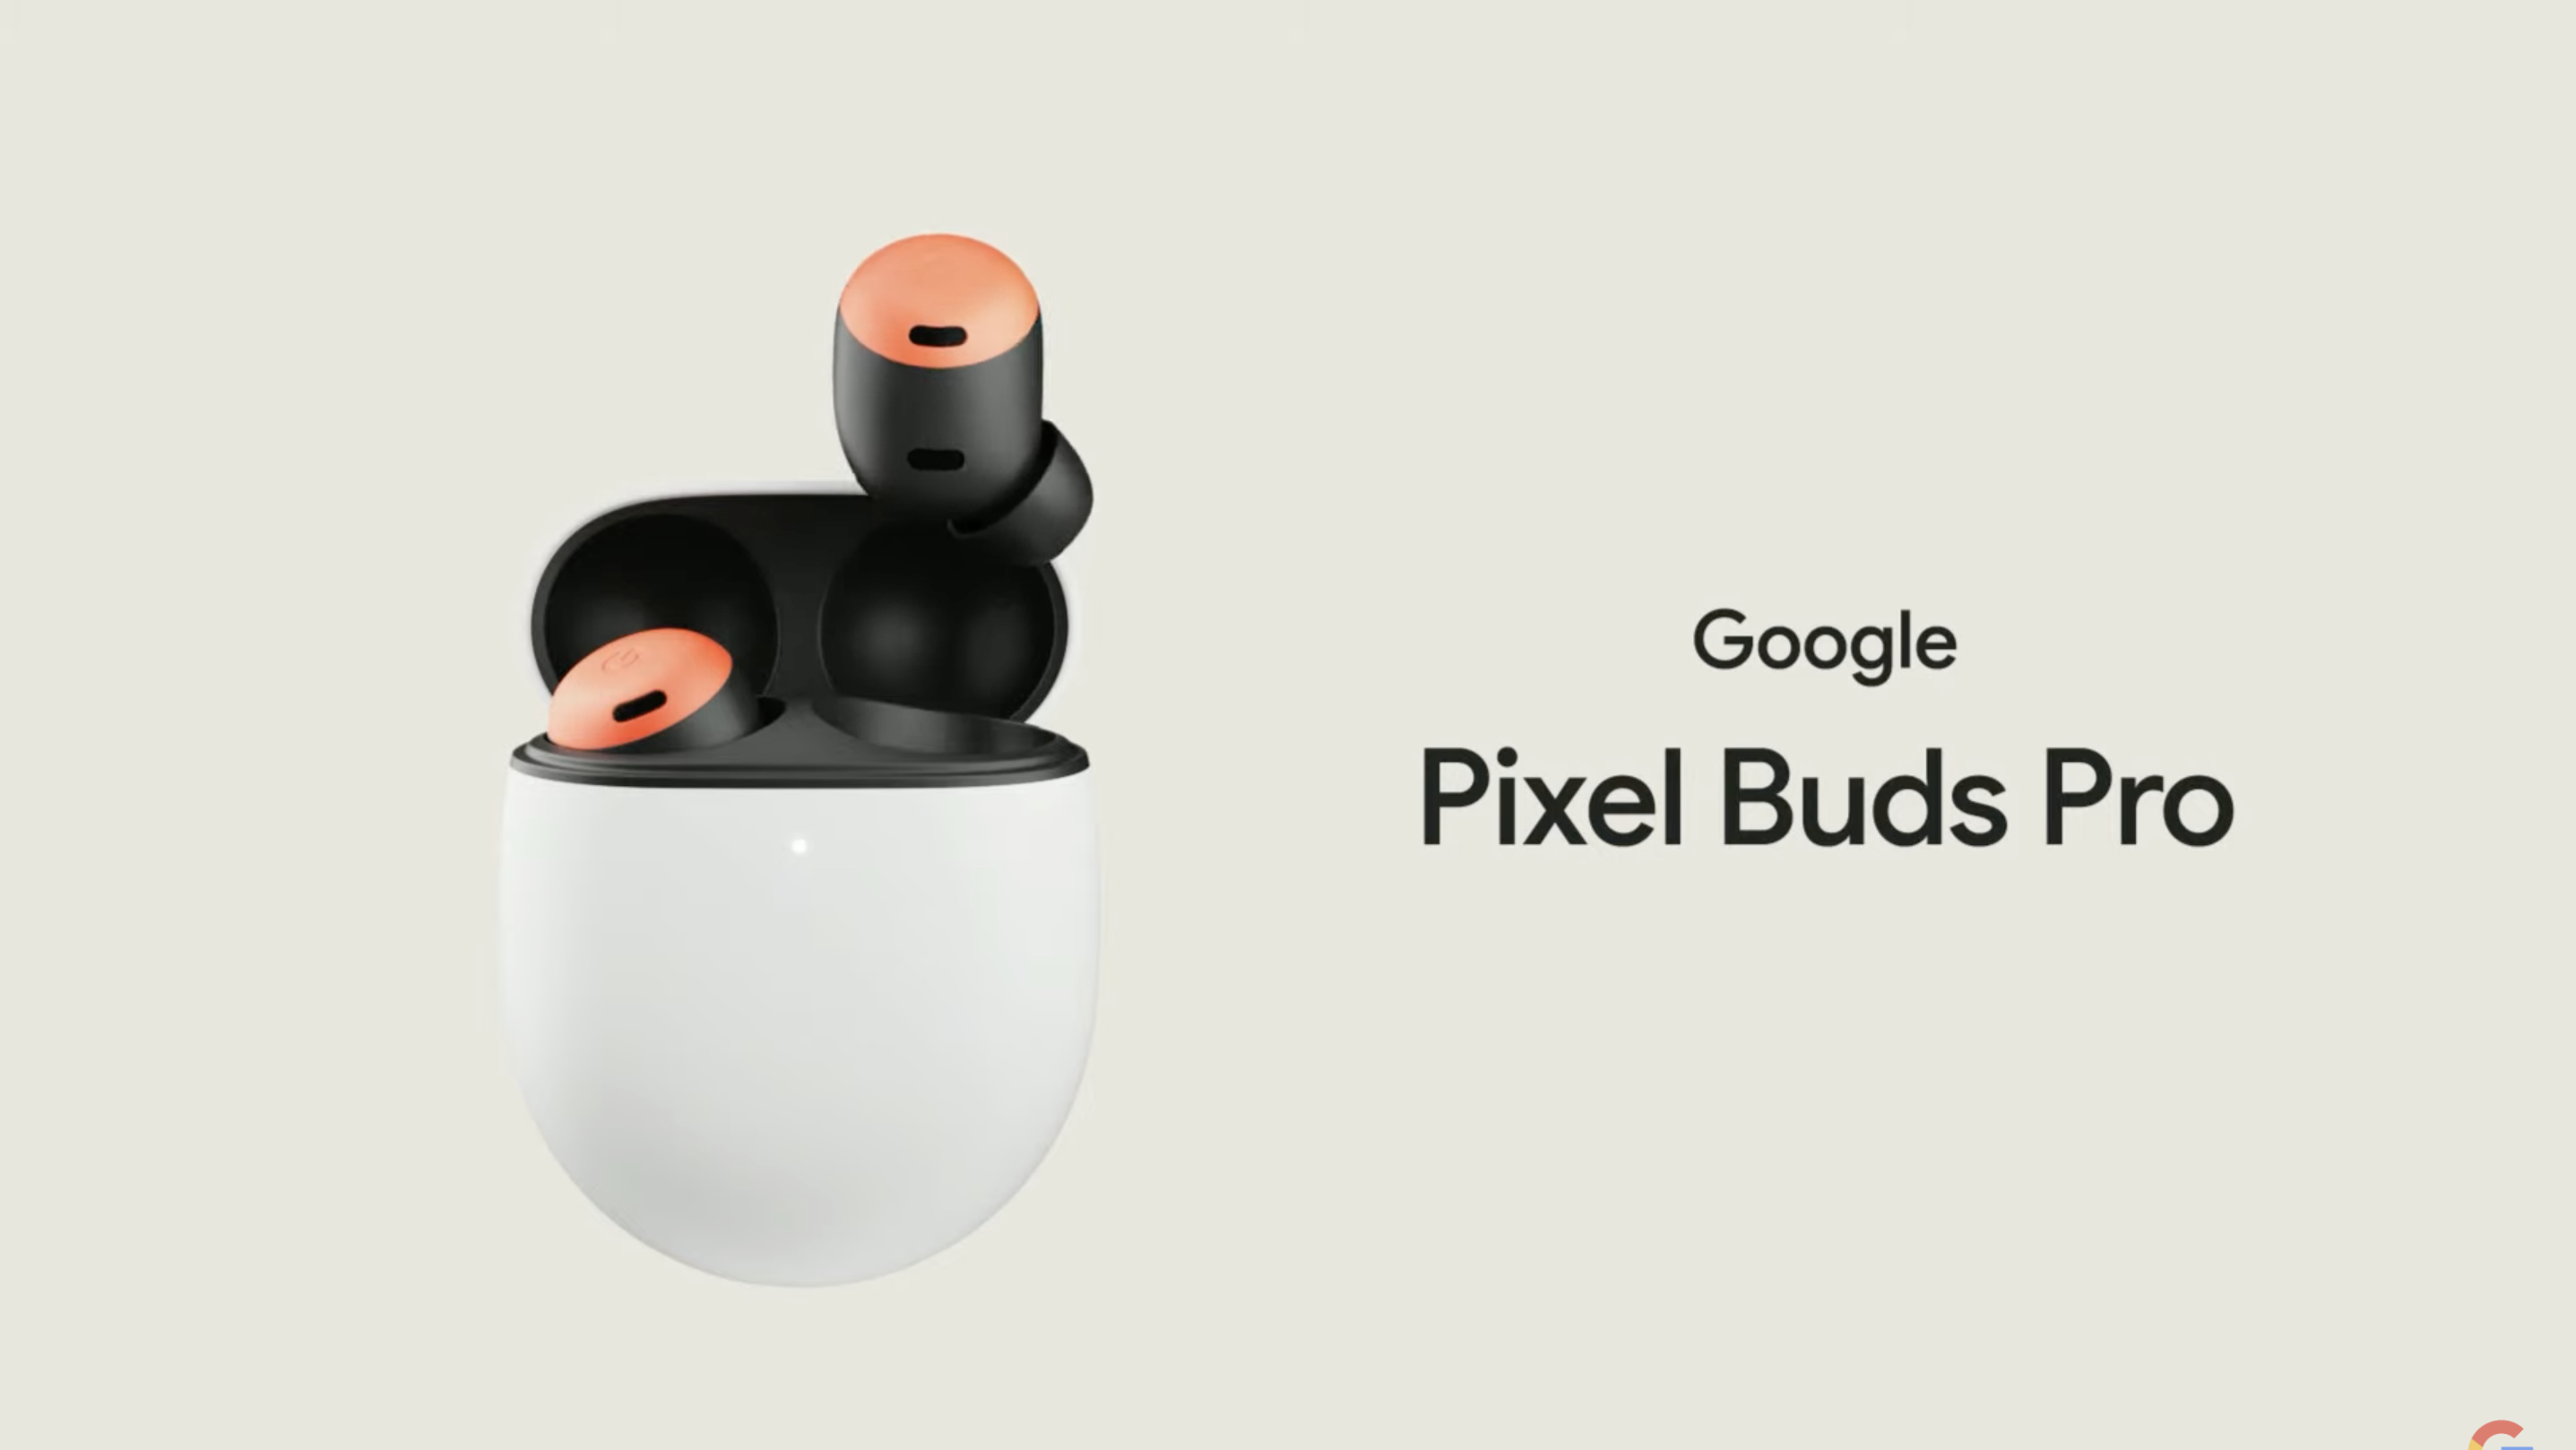 Google Pixel Buds Pro at IO 2022